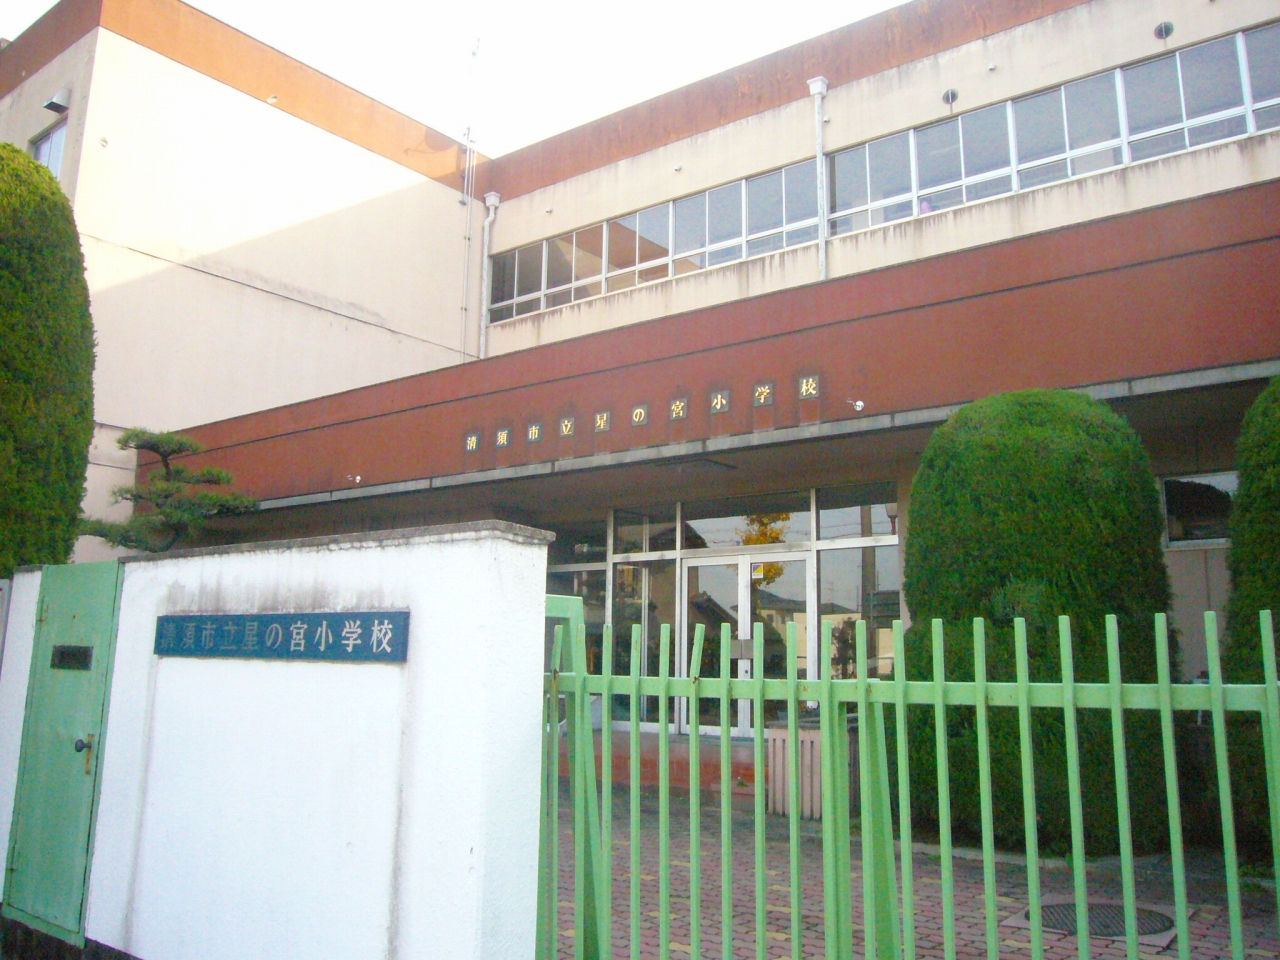 Primary school. 1020m to Kiyosu Municipal Hoshinomiya elementary school (elementary school)